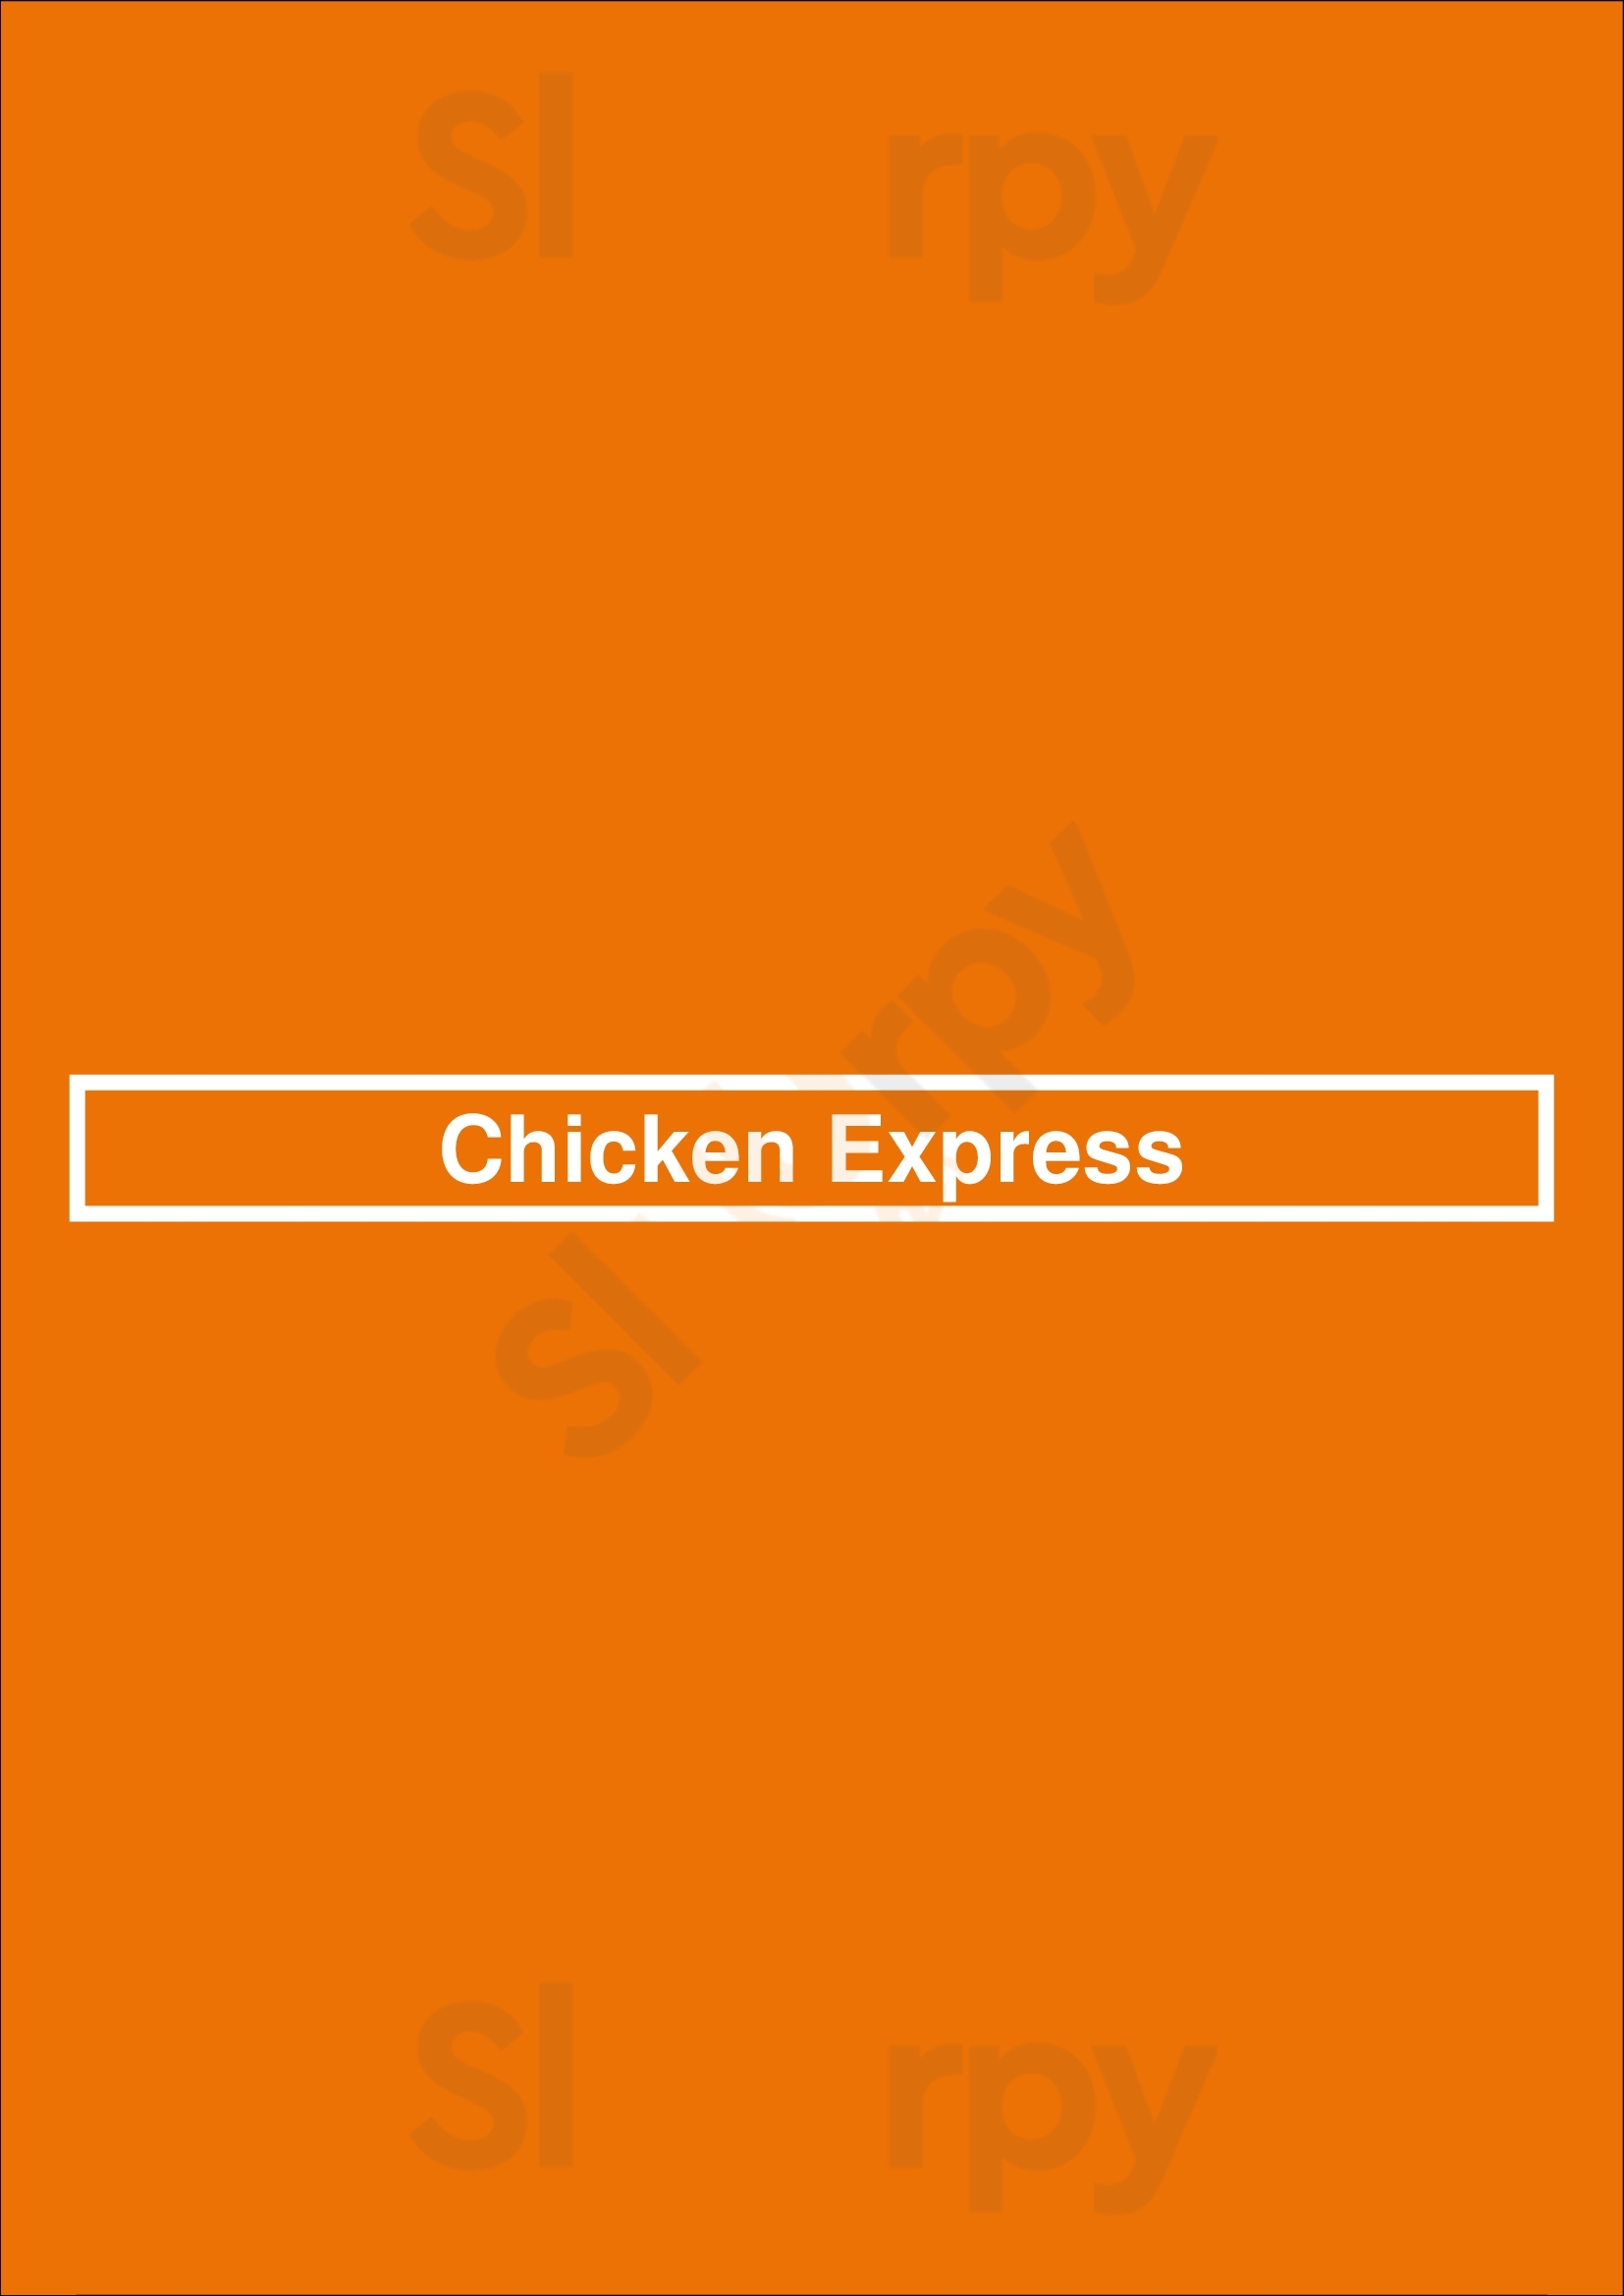 Chicken Express Tulsa Menu - 1